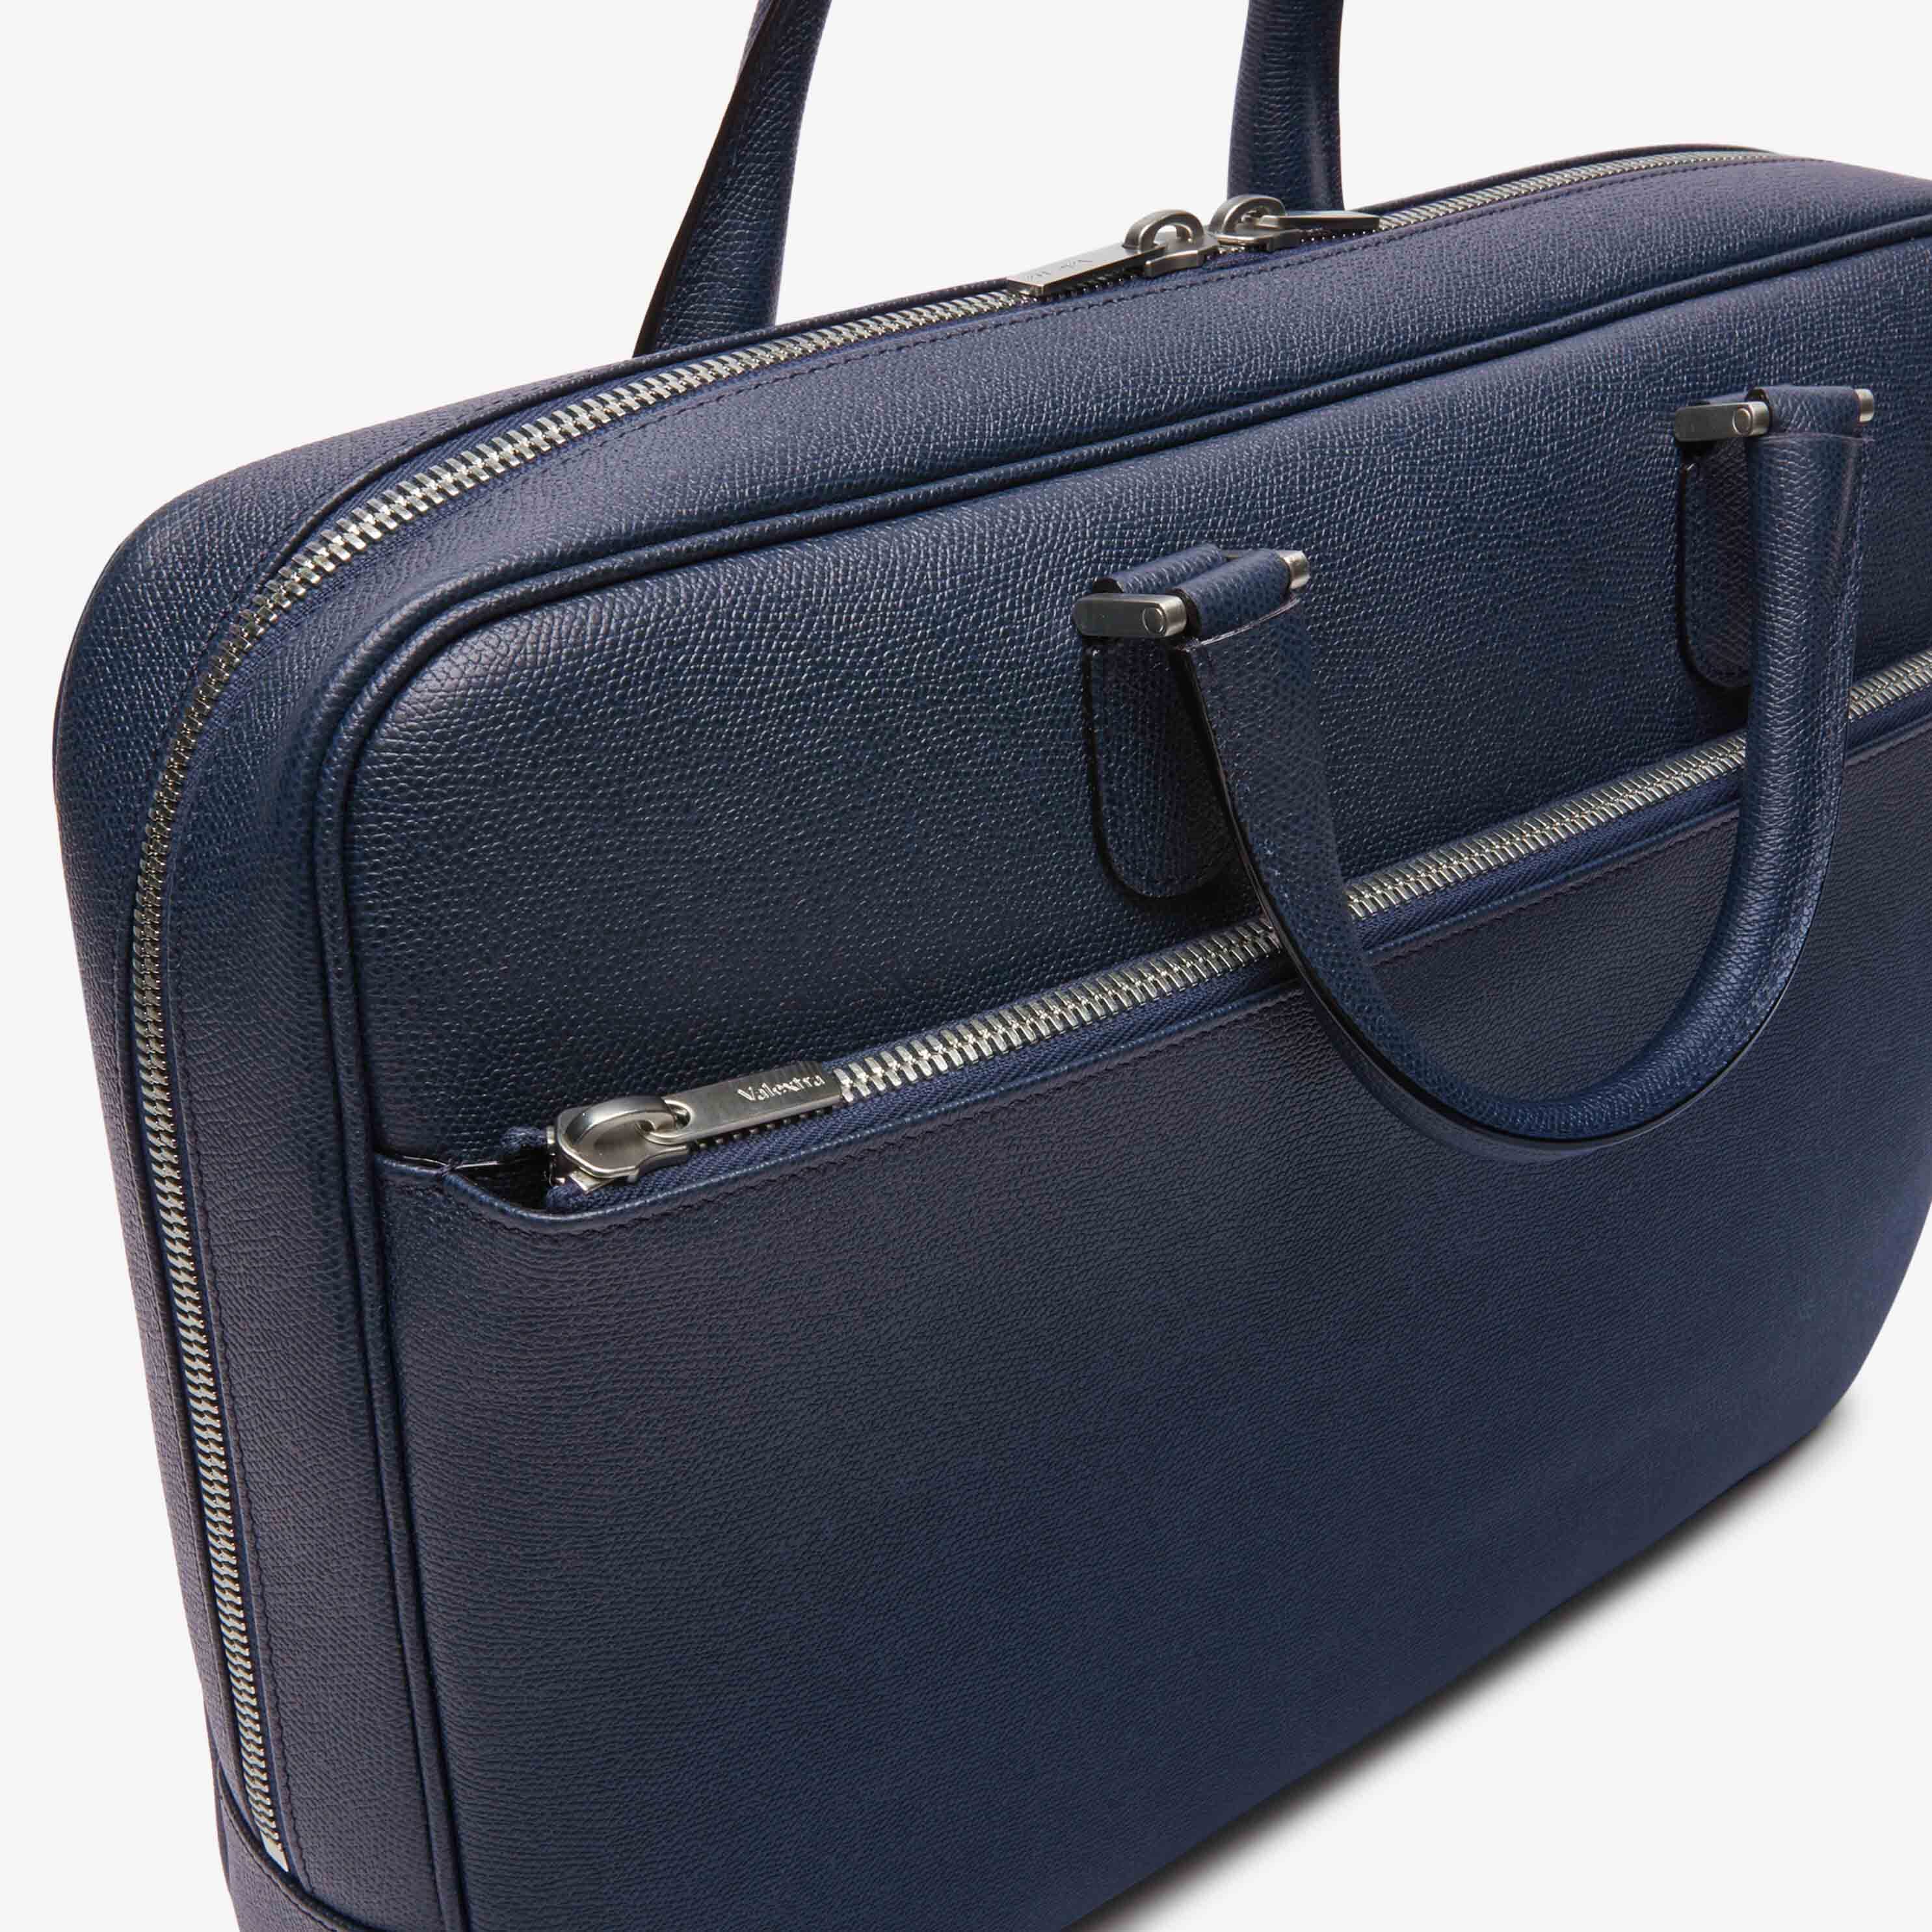 Avietta Briefcase - Dark Blue - Vitello VS - Valextra - 5